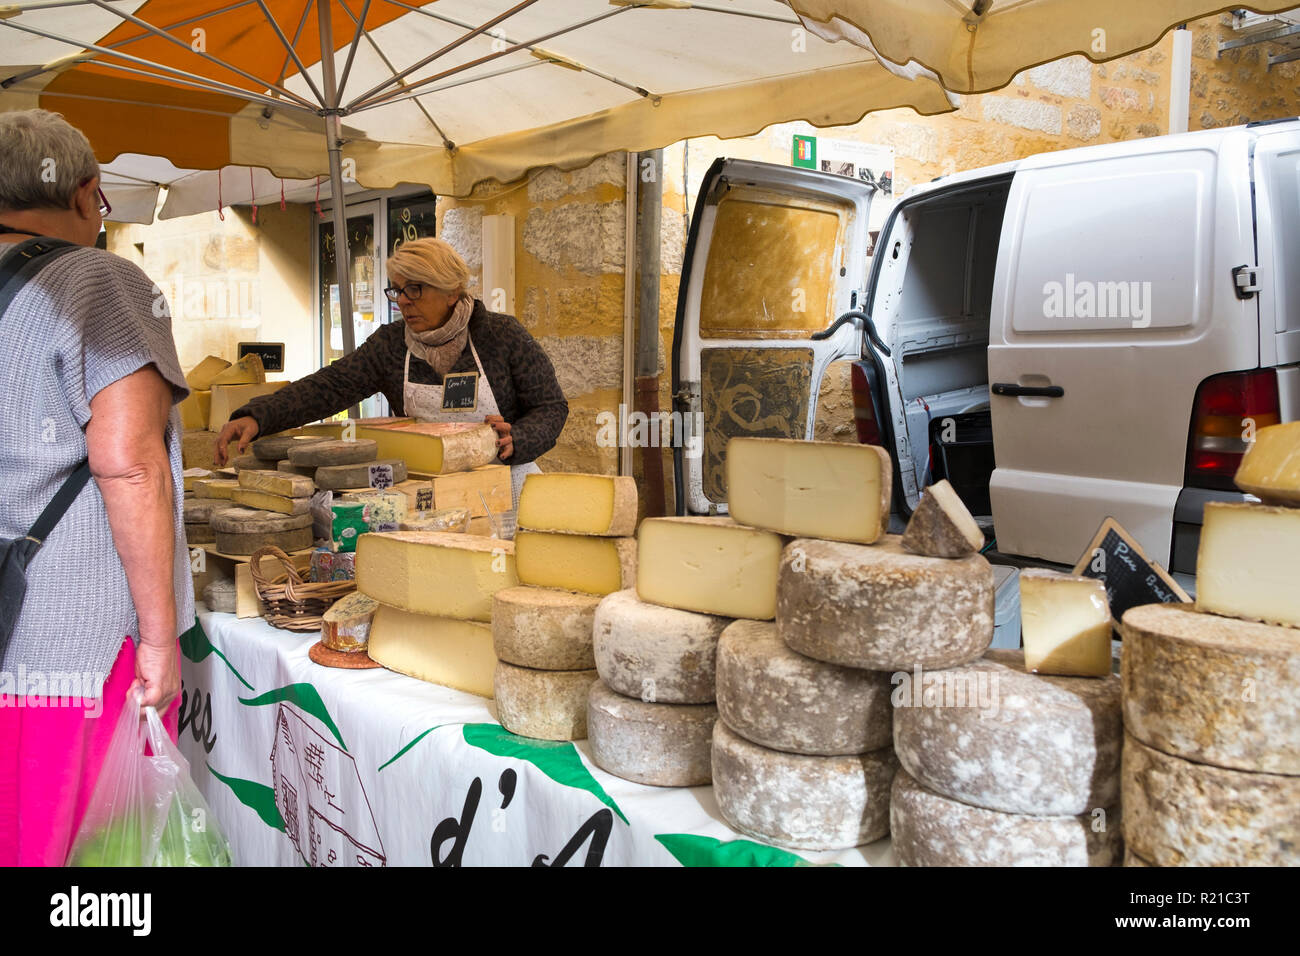 St-Cyprien, Dordogne, France - 24th September 2015: Cheese stall at the Sunday street market in St-Cyprien, Dordogne, France Stock Photo